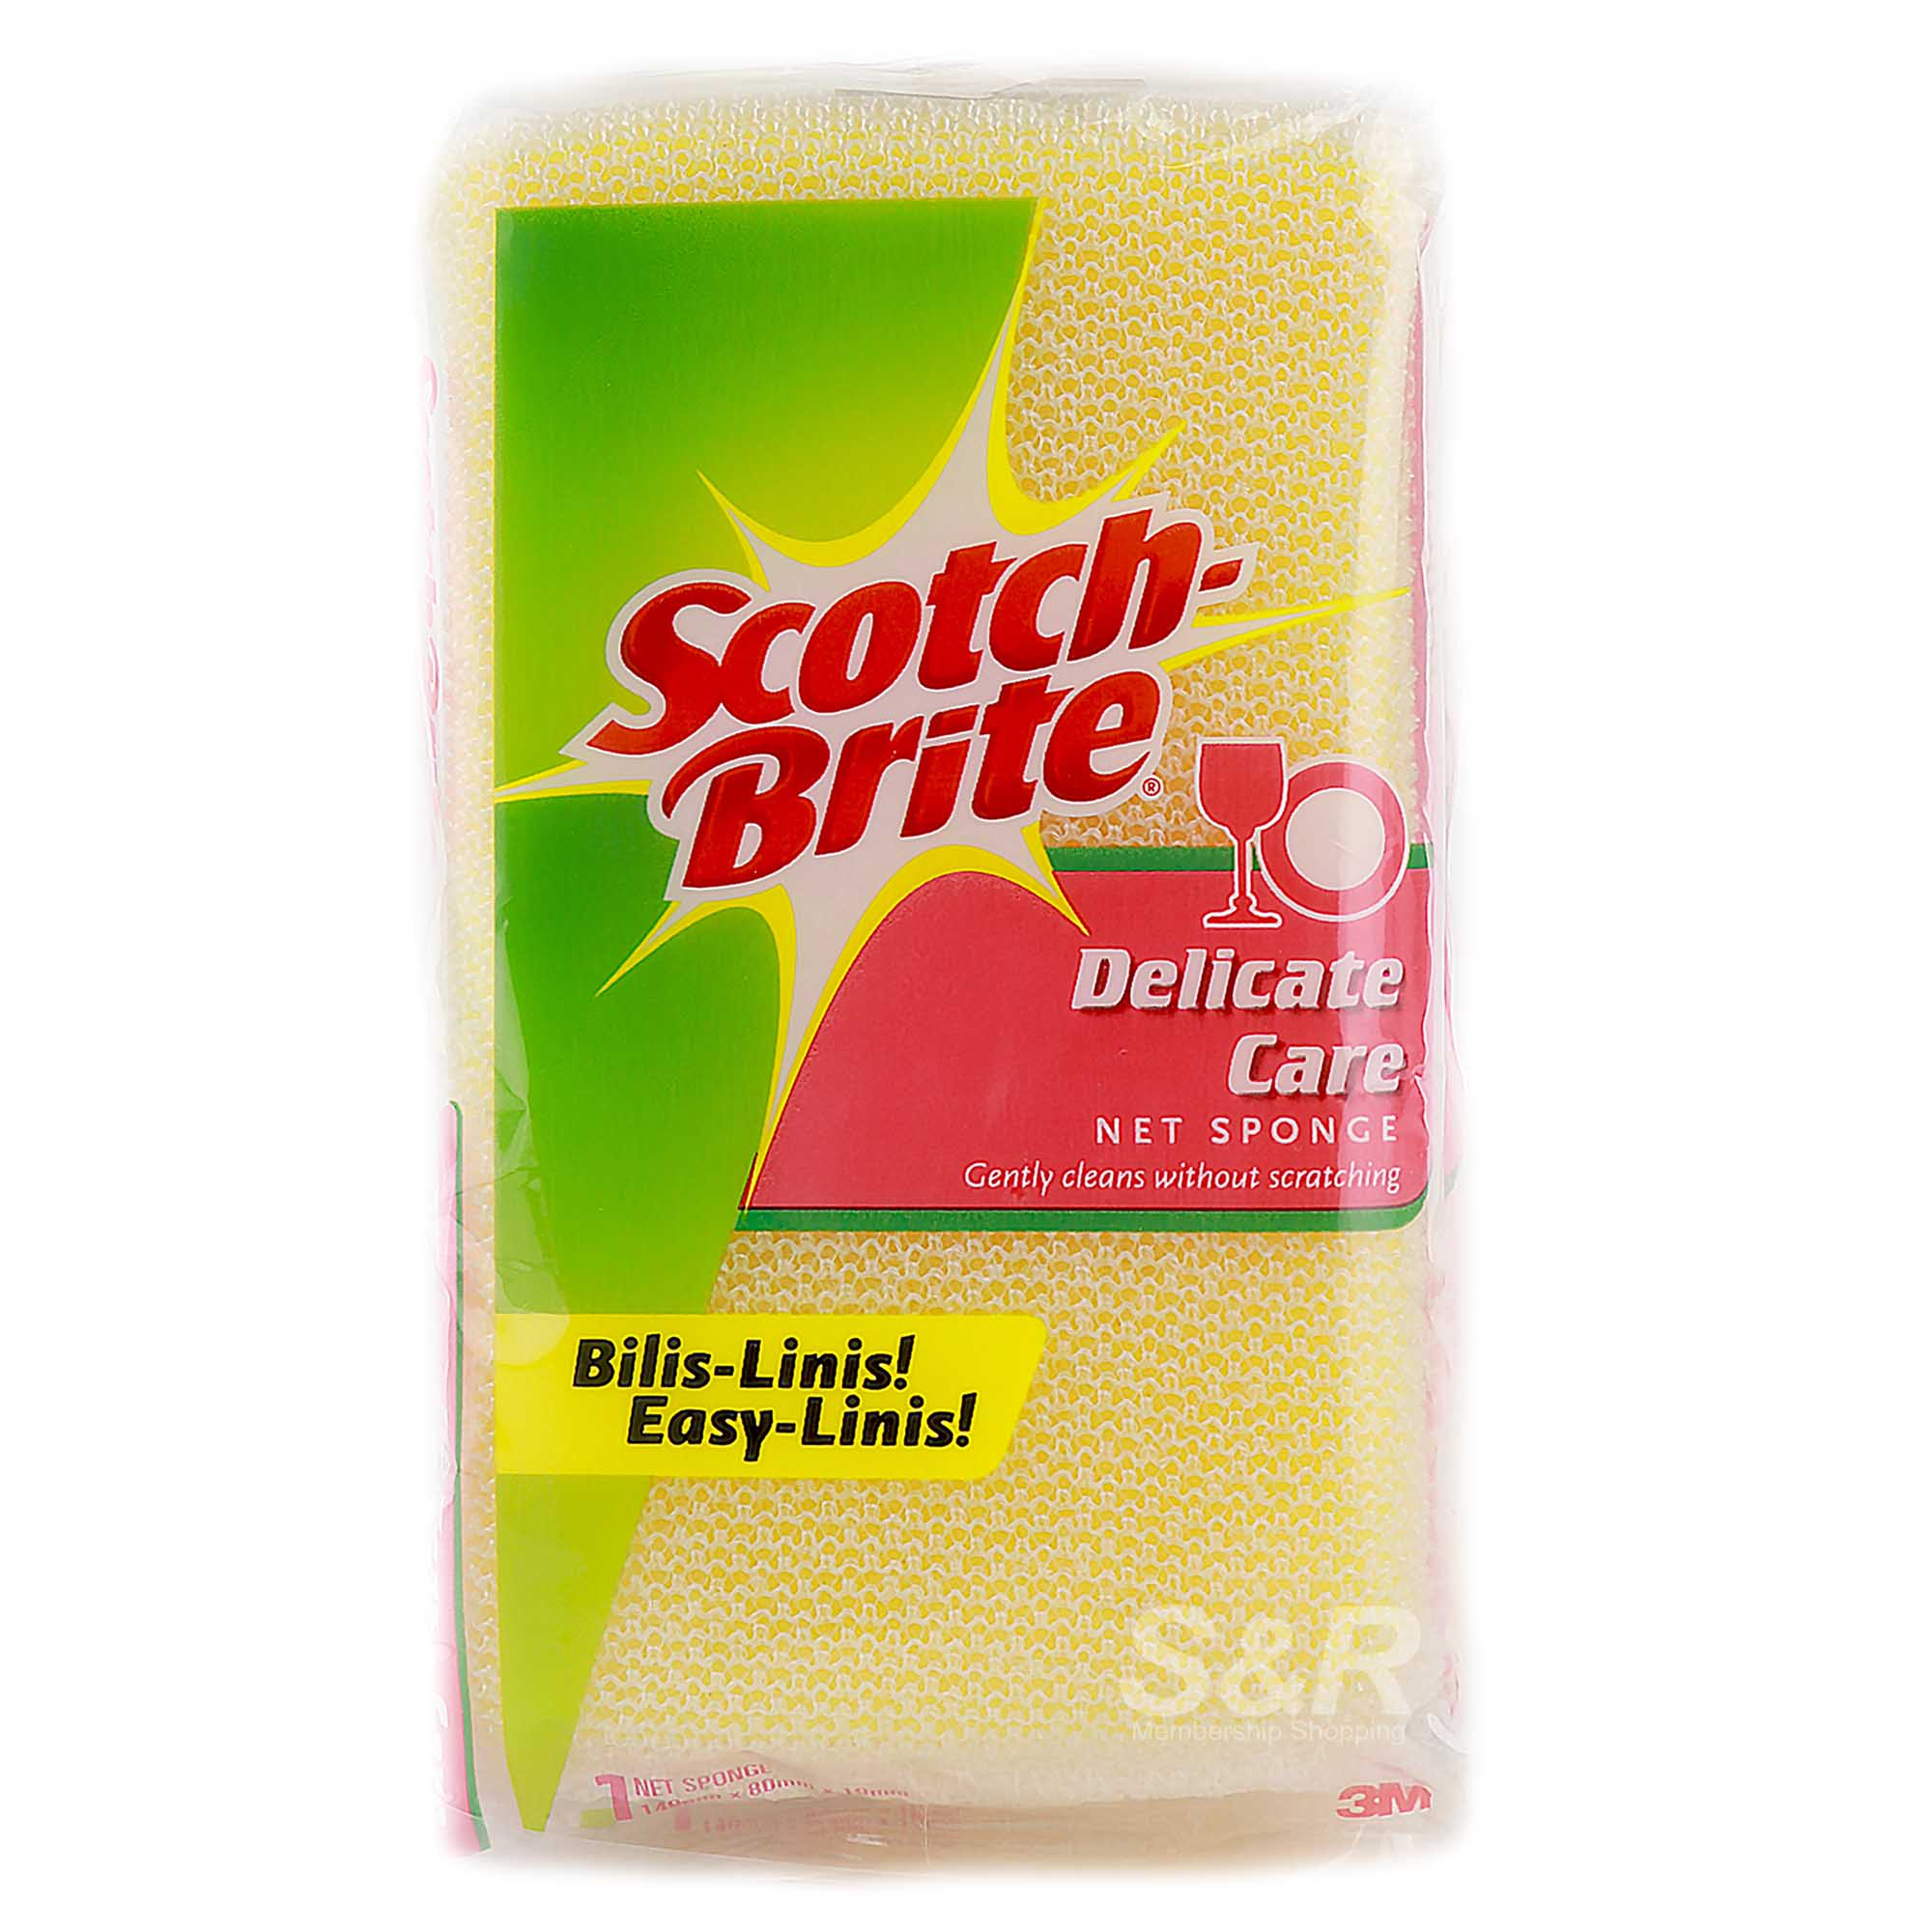 Scotch-Brite Delicate Care Sponge Net 3pcs